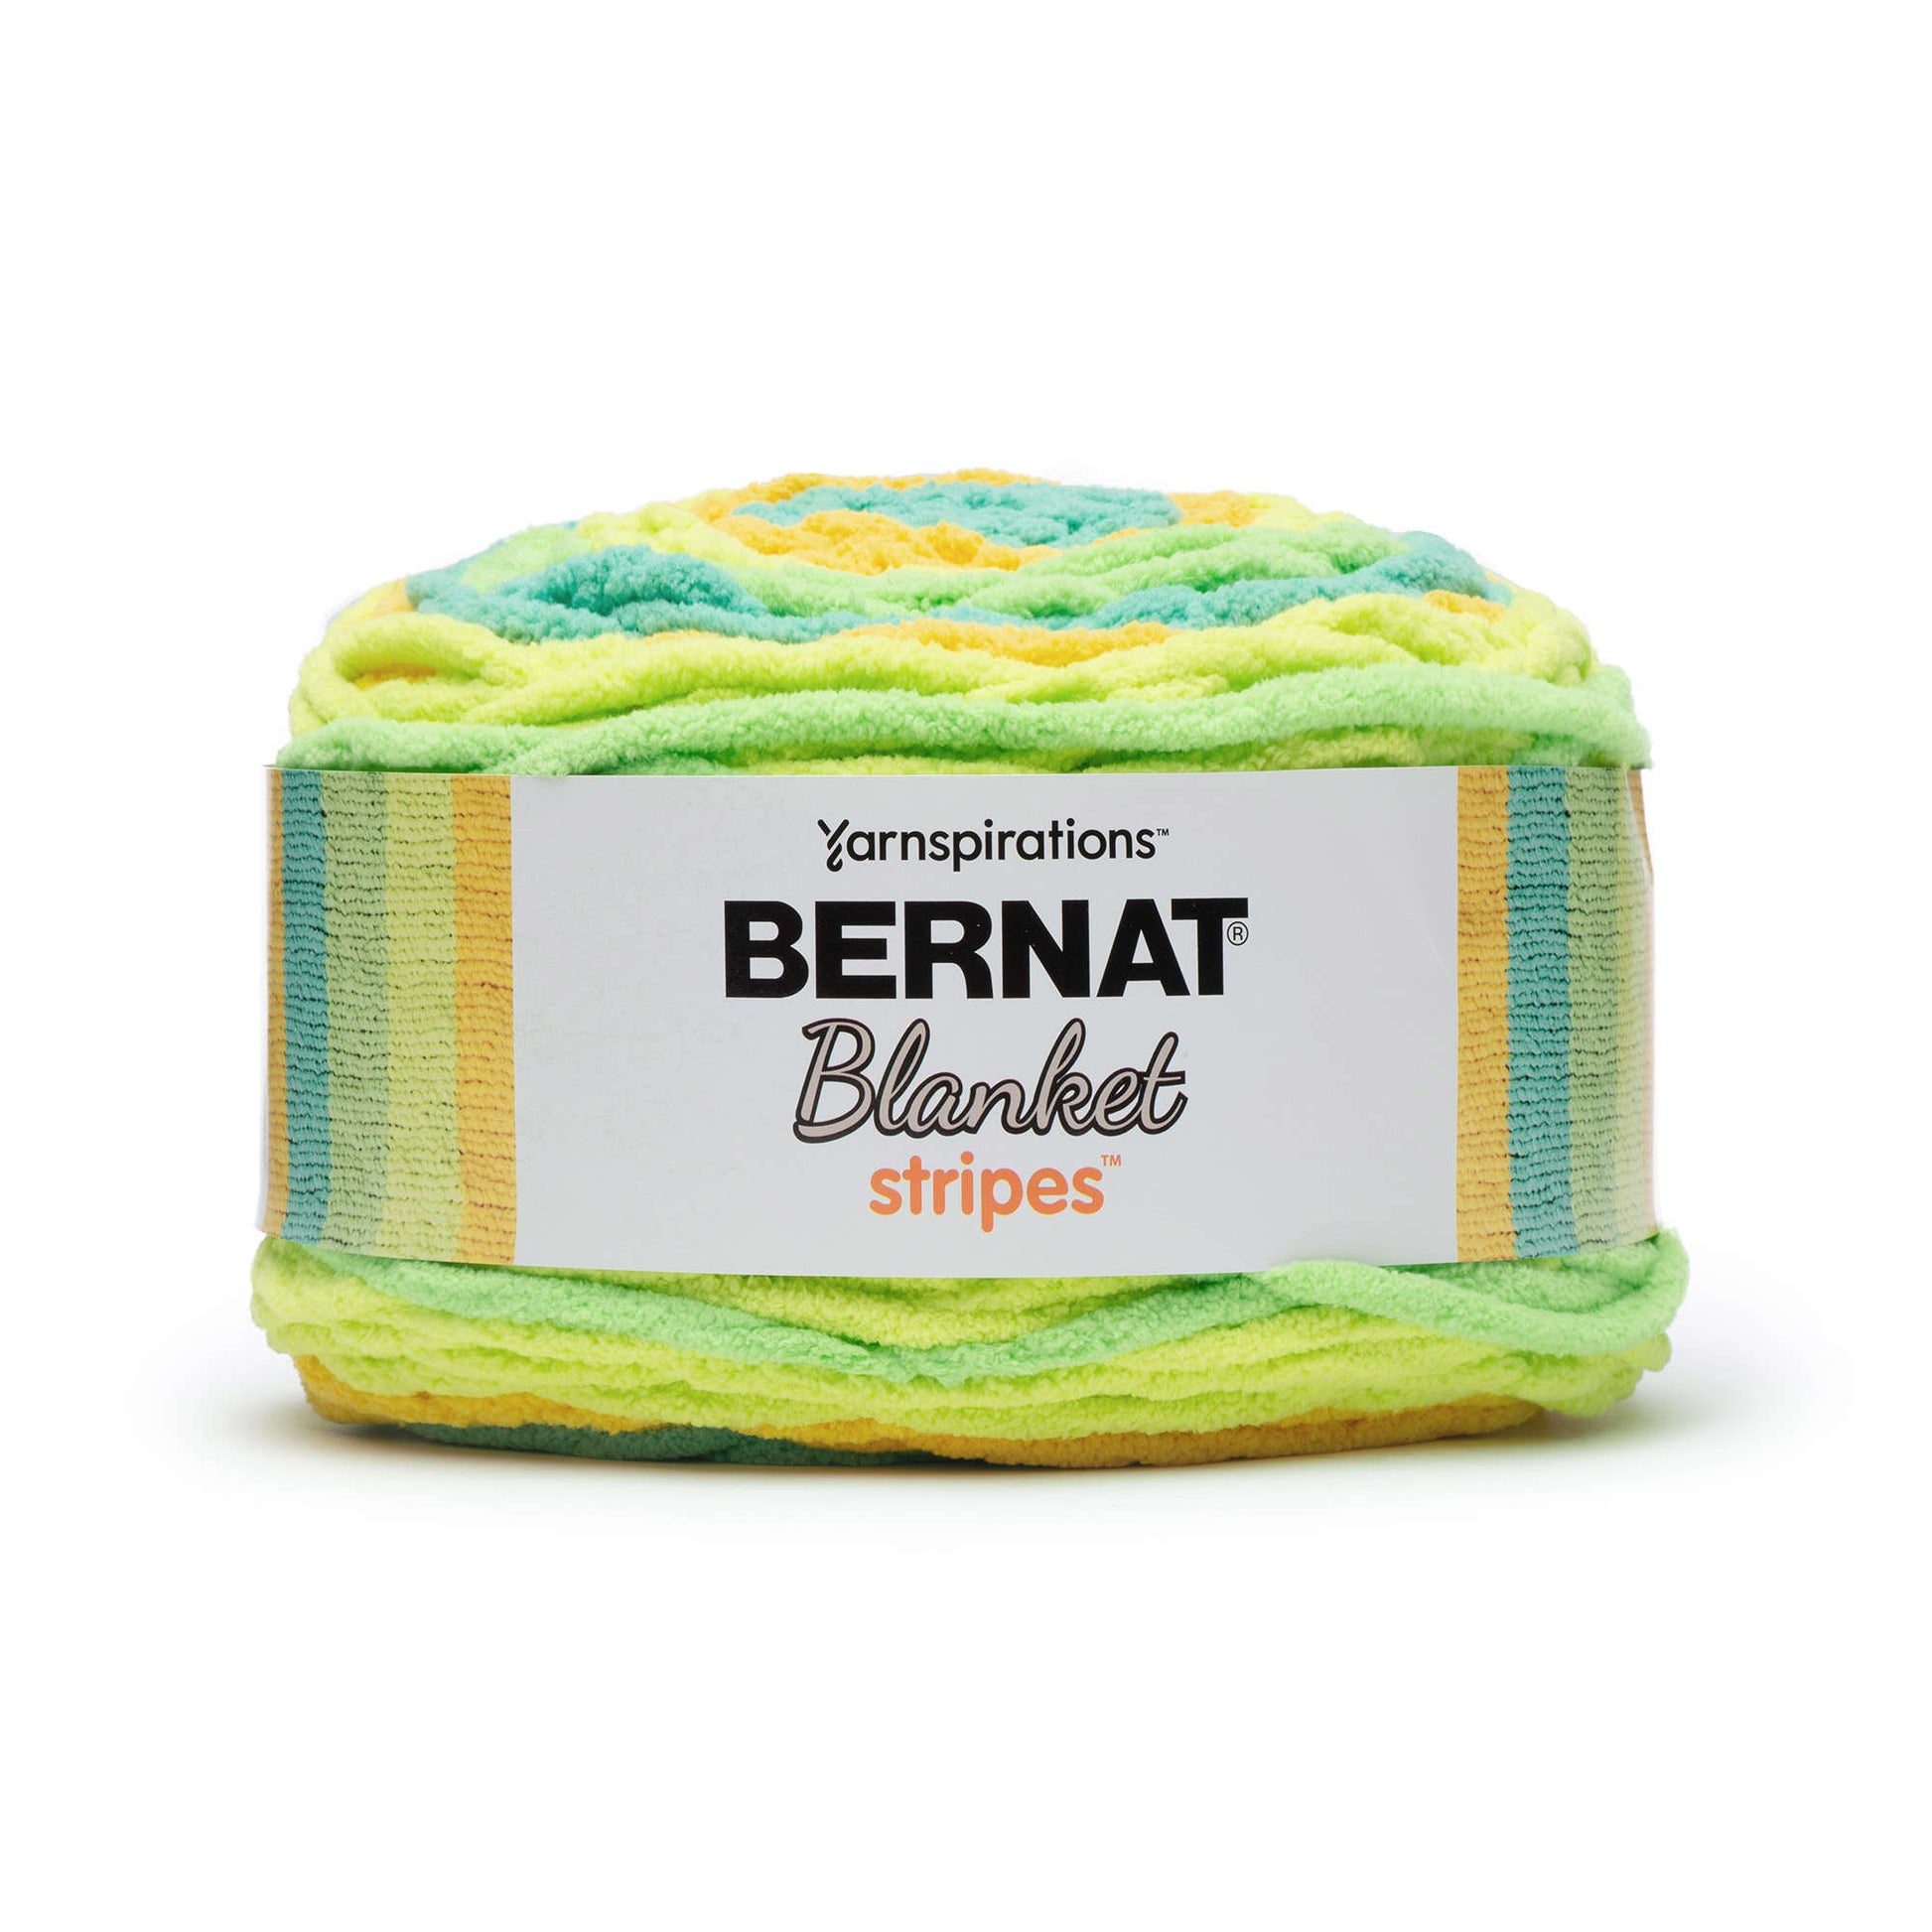 Bernat Blanket Stripes Yarn (300g/10.5oz) - Discontinued Shades Lemon Lime